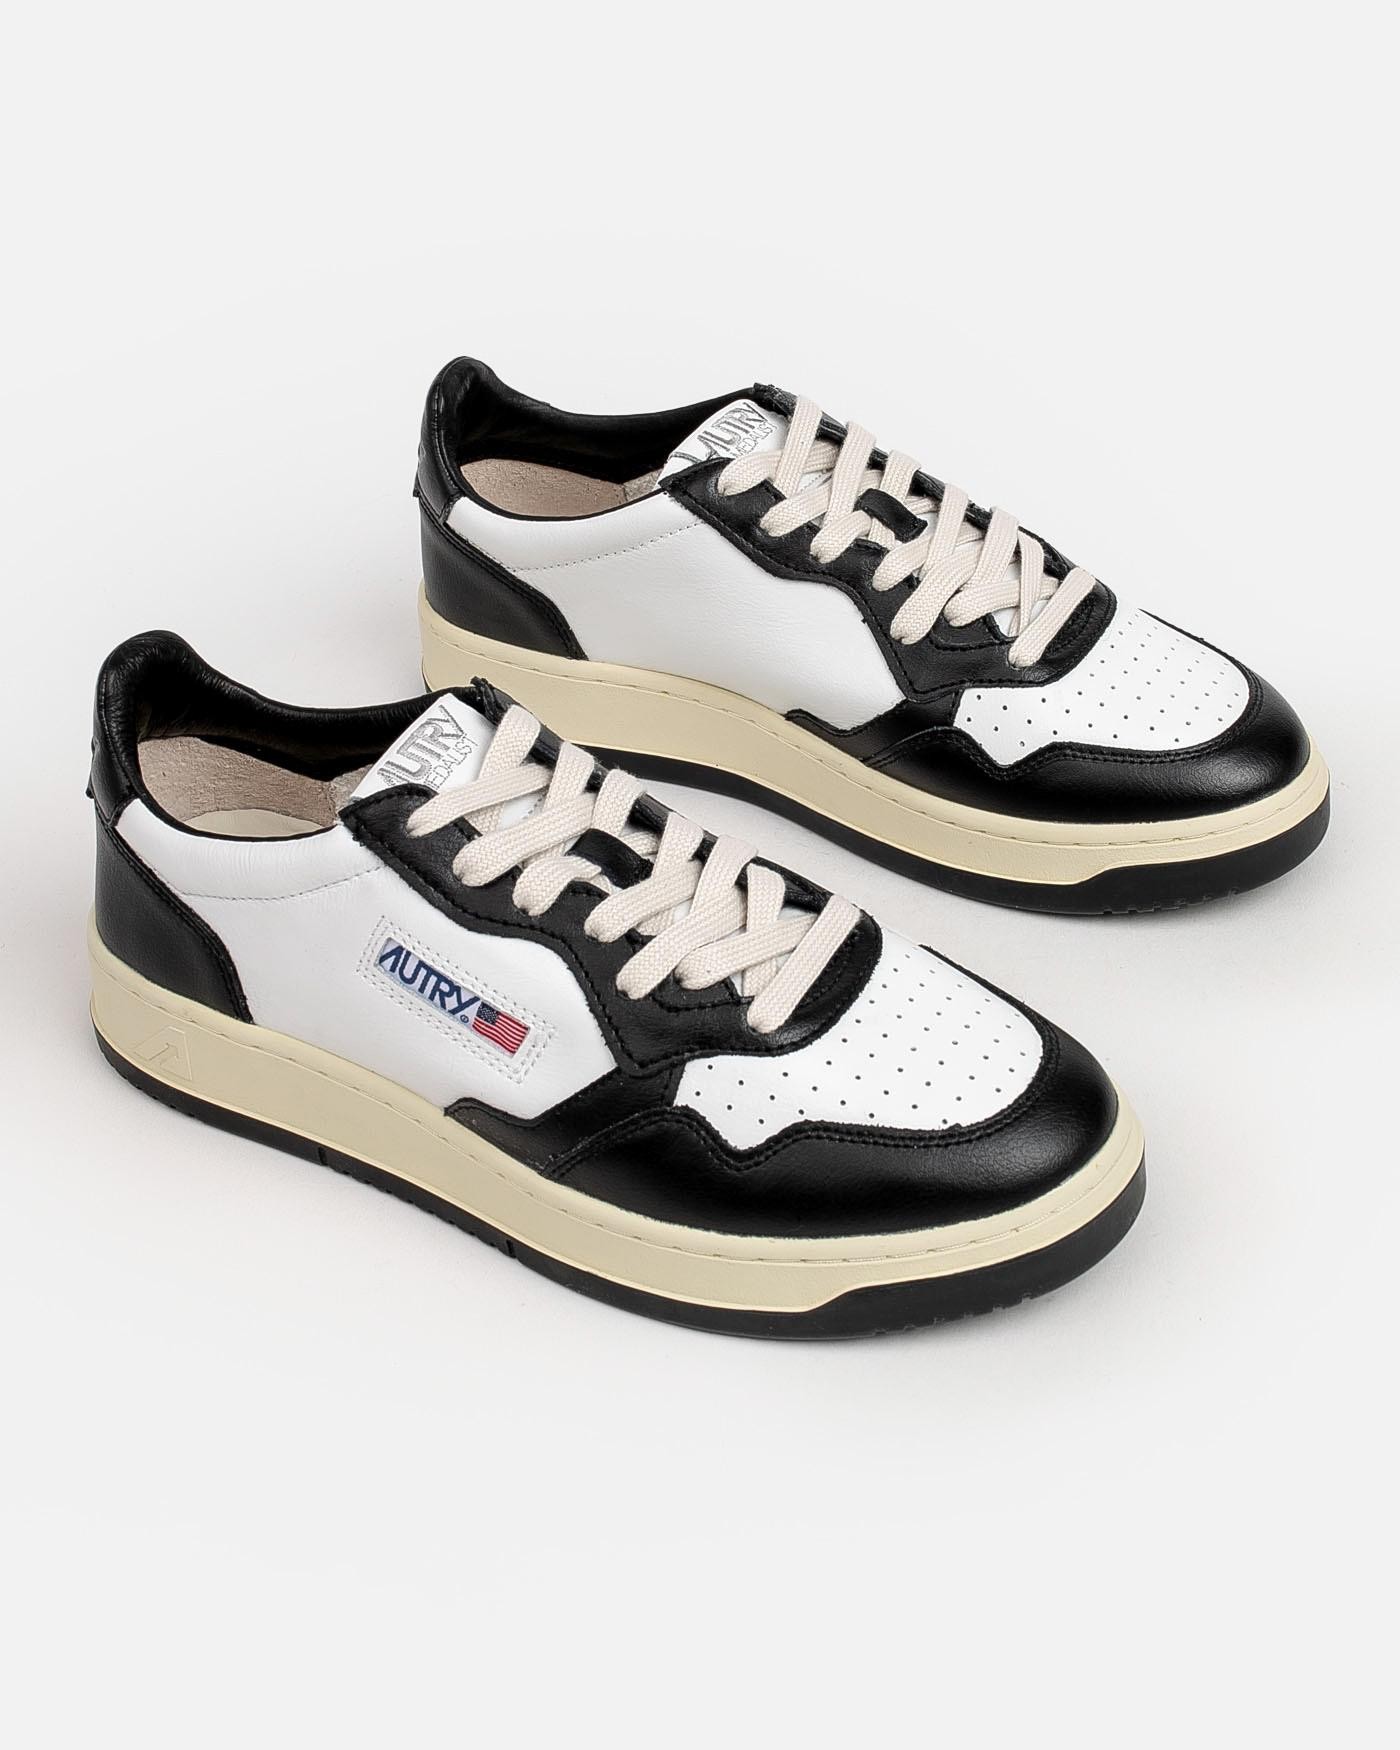 autry-zapatillas-aulm-wb01-sneakers-black-white-negras-4